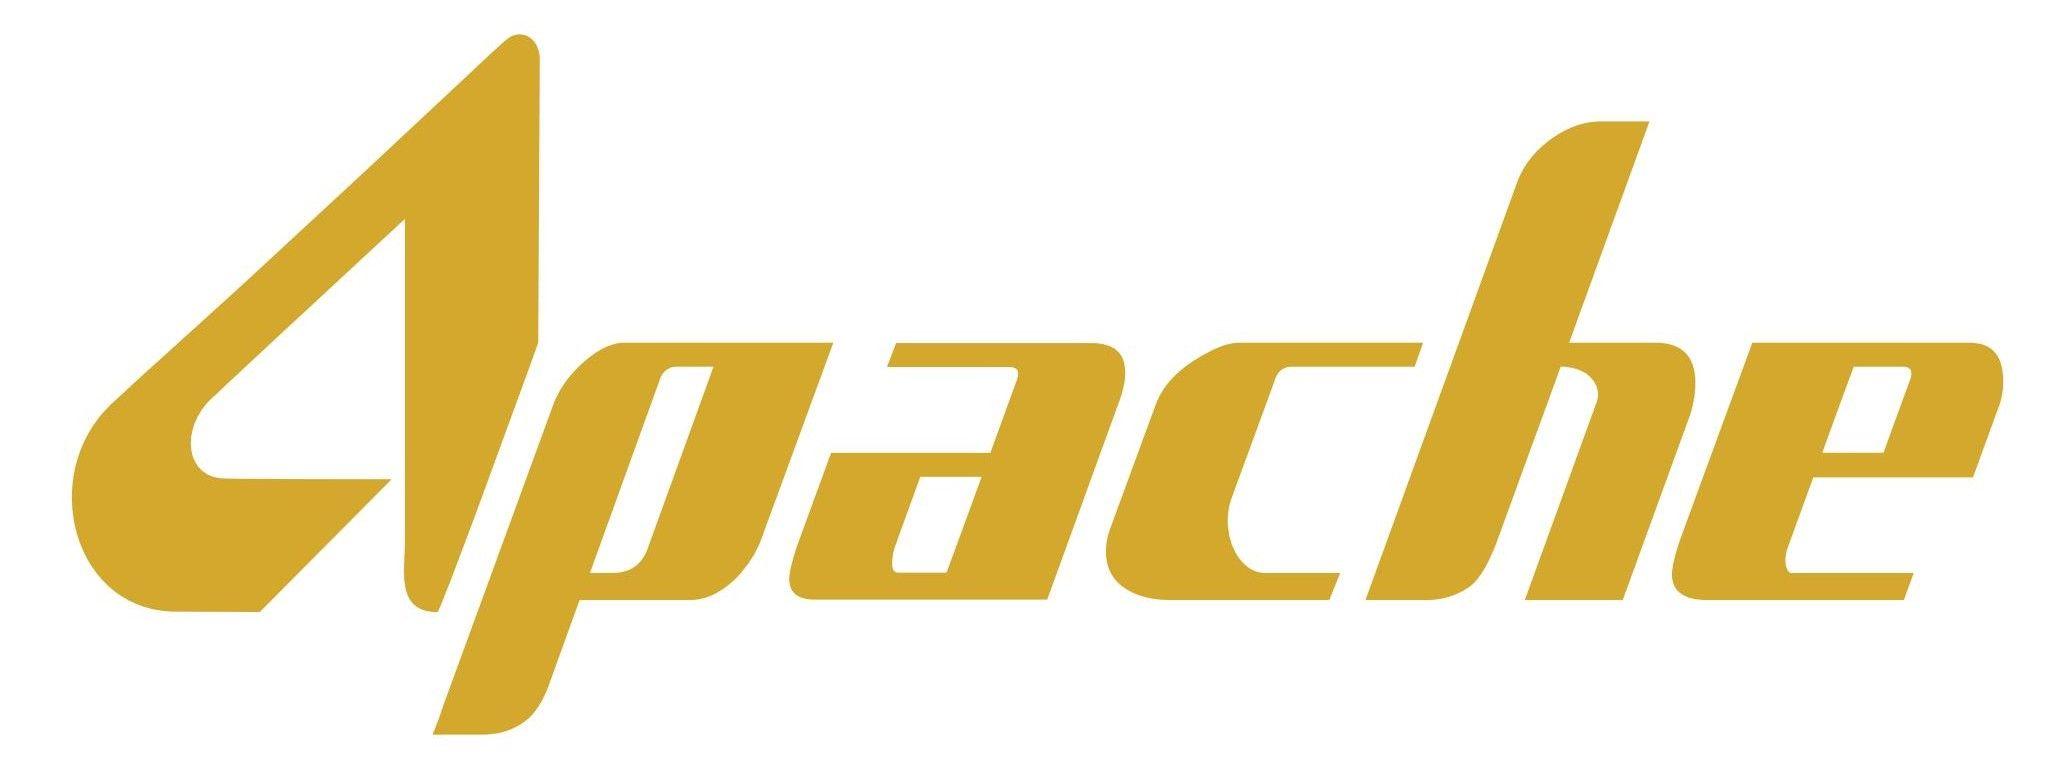 Apache Logo - Apache Logos